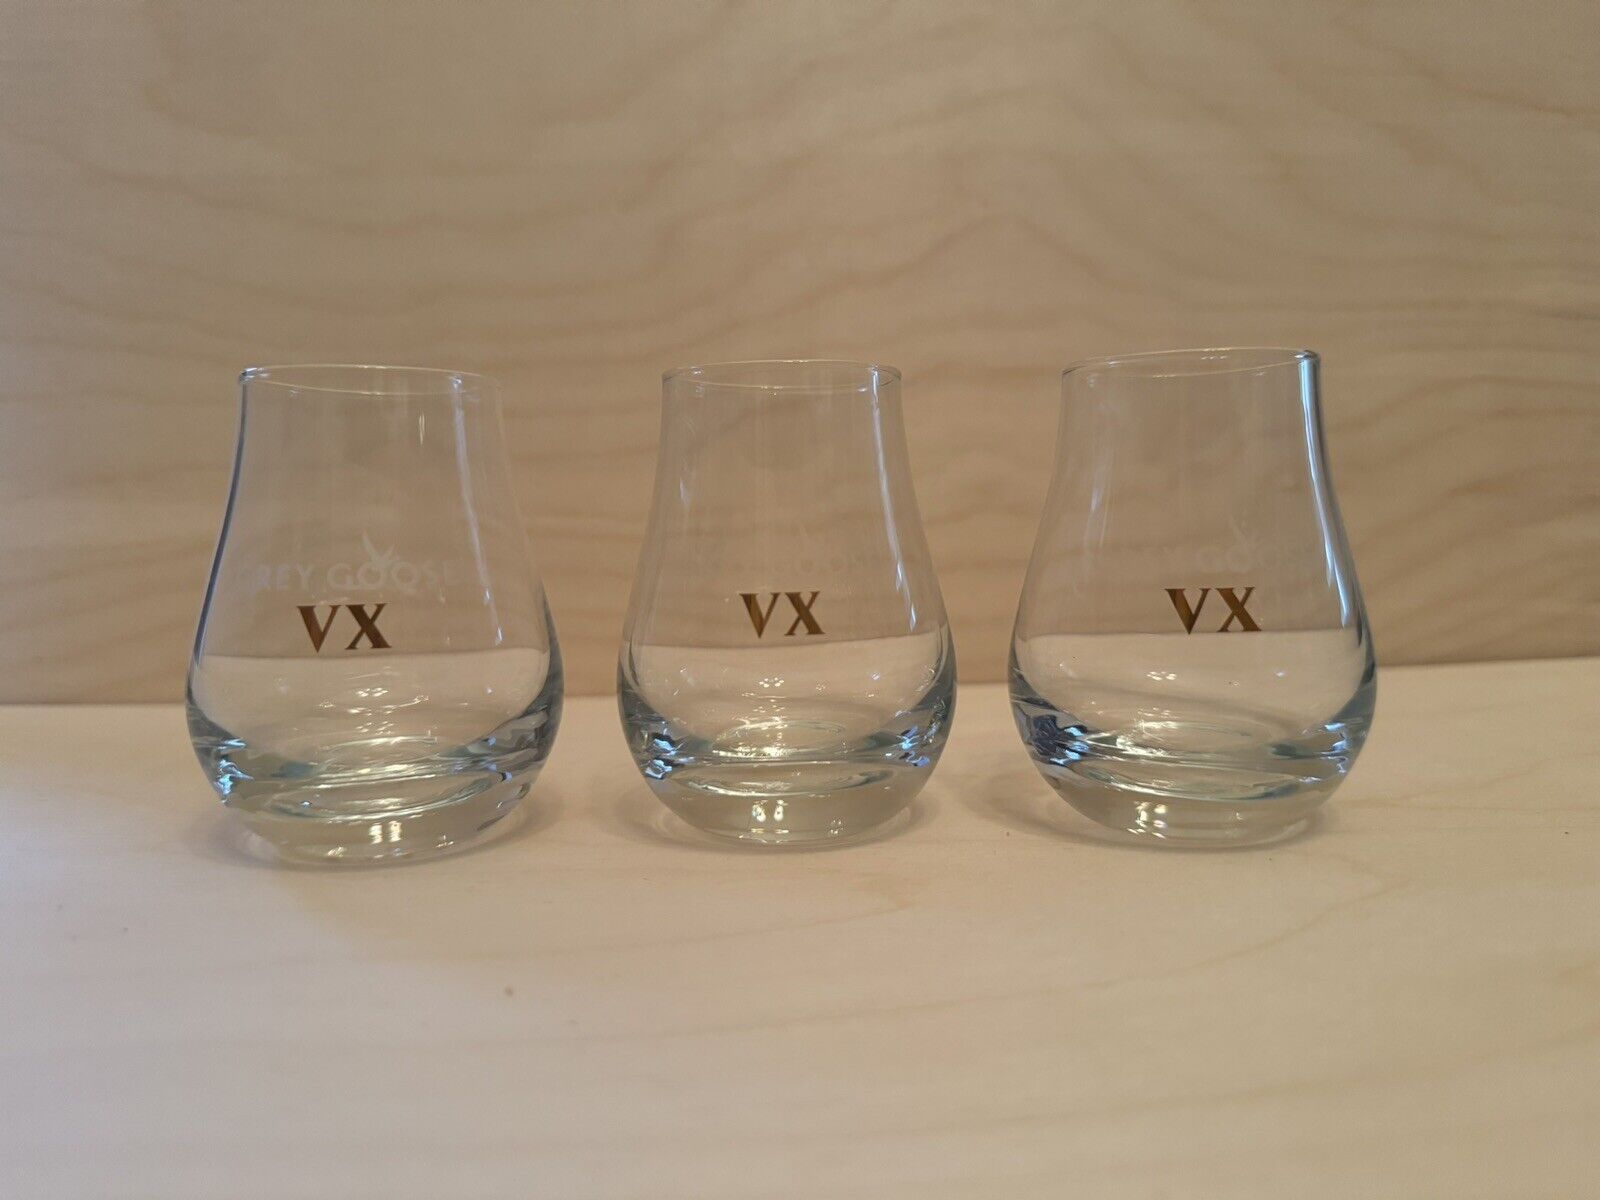 Grey Goose VX Tasting flight Glass 4 oz vodka shots barware set of 6/NEW